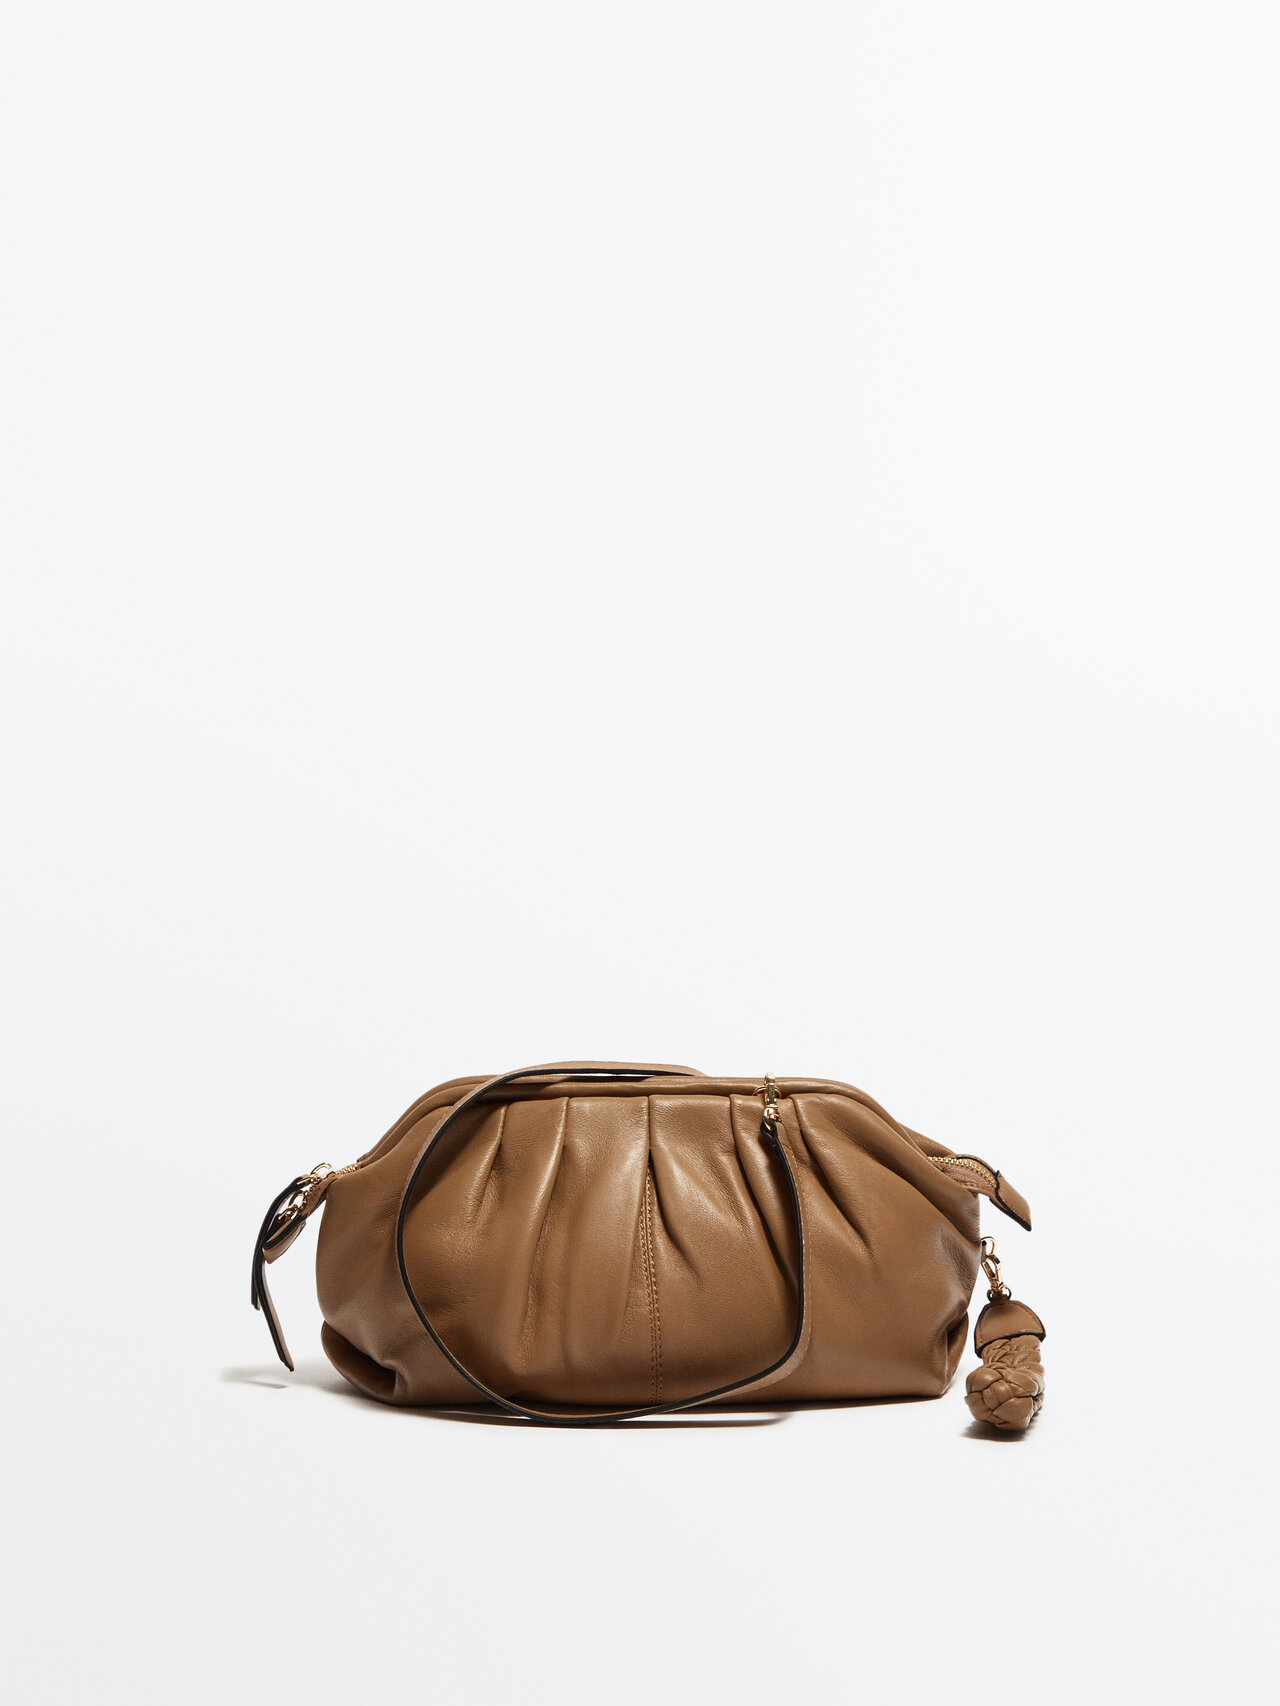 Massimo Dutti Gathered Leather Bag - Studio In Beige